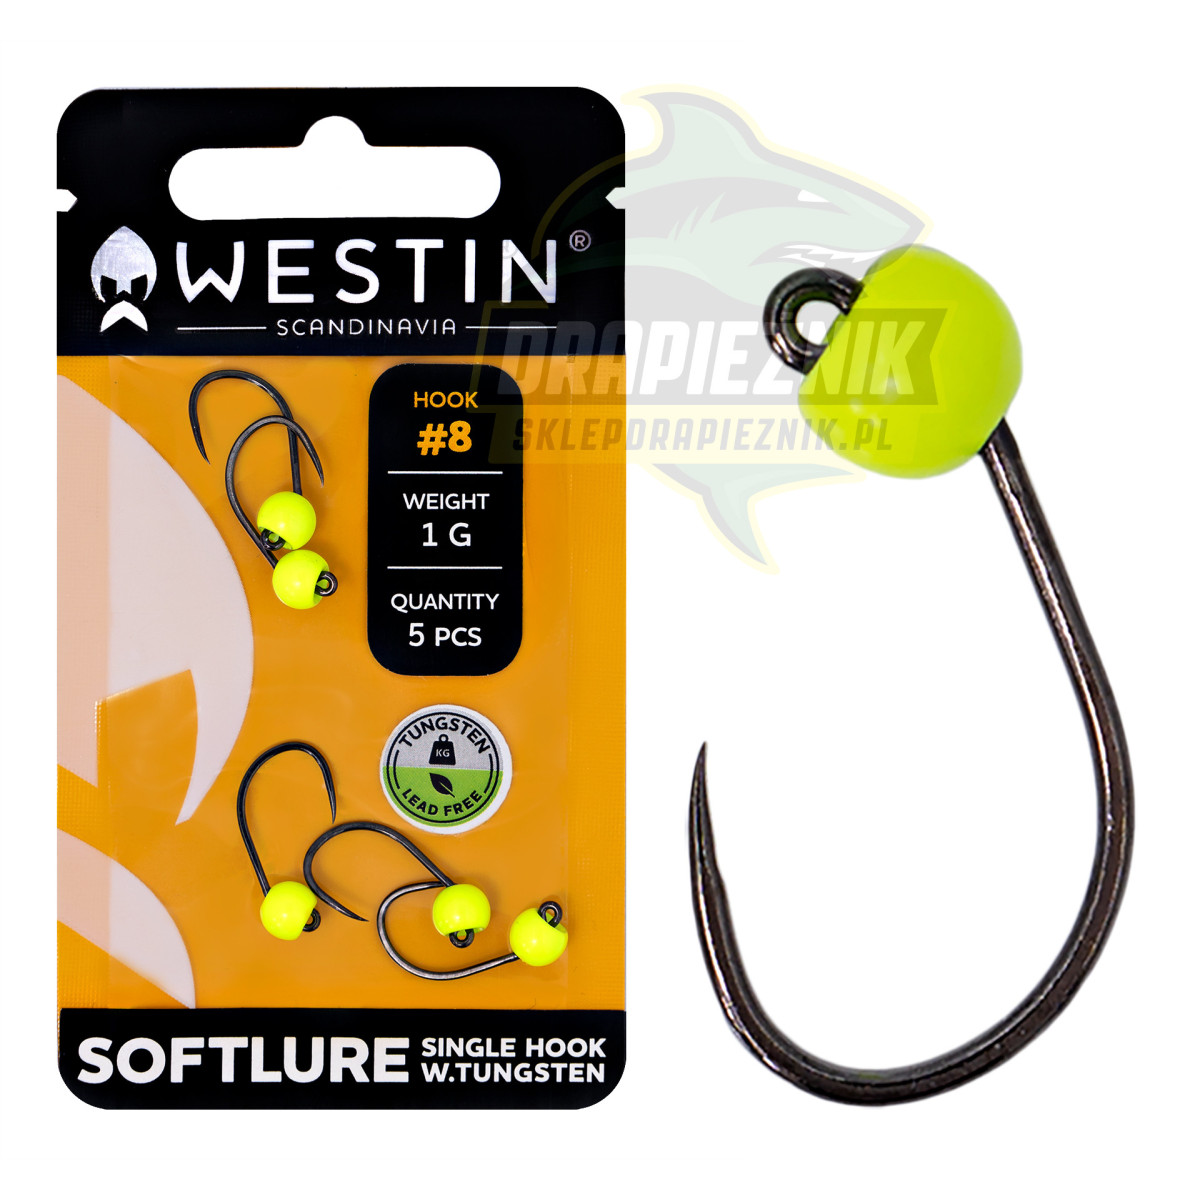 Główki Westin Softlure Single Hook Tungsten - YELLOW / hak 8 / 1.0g